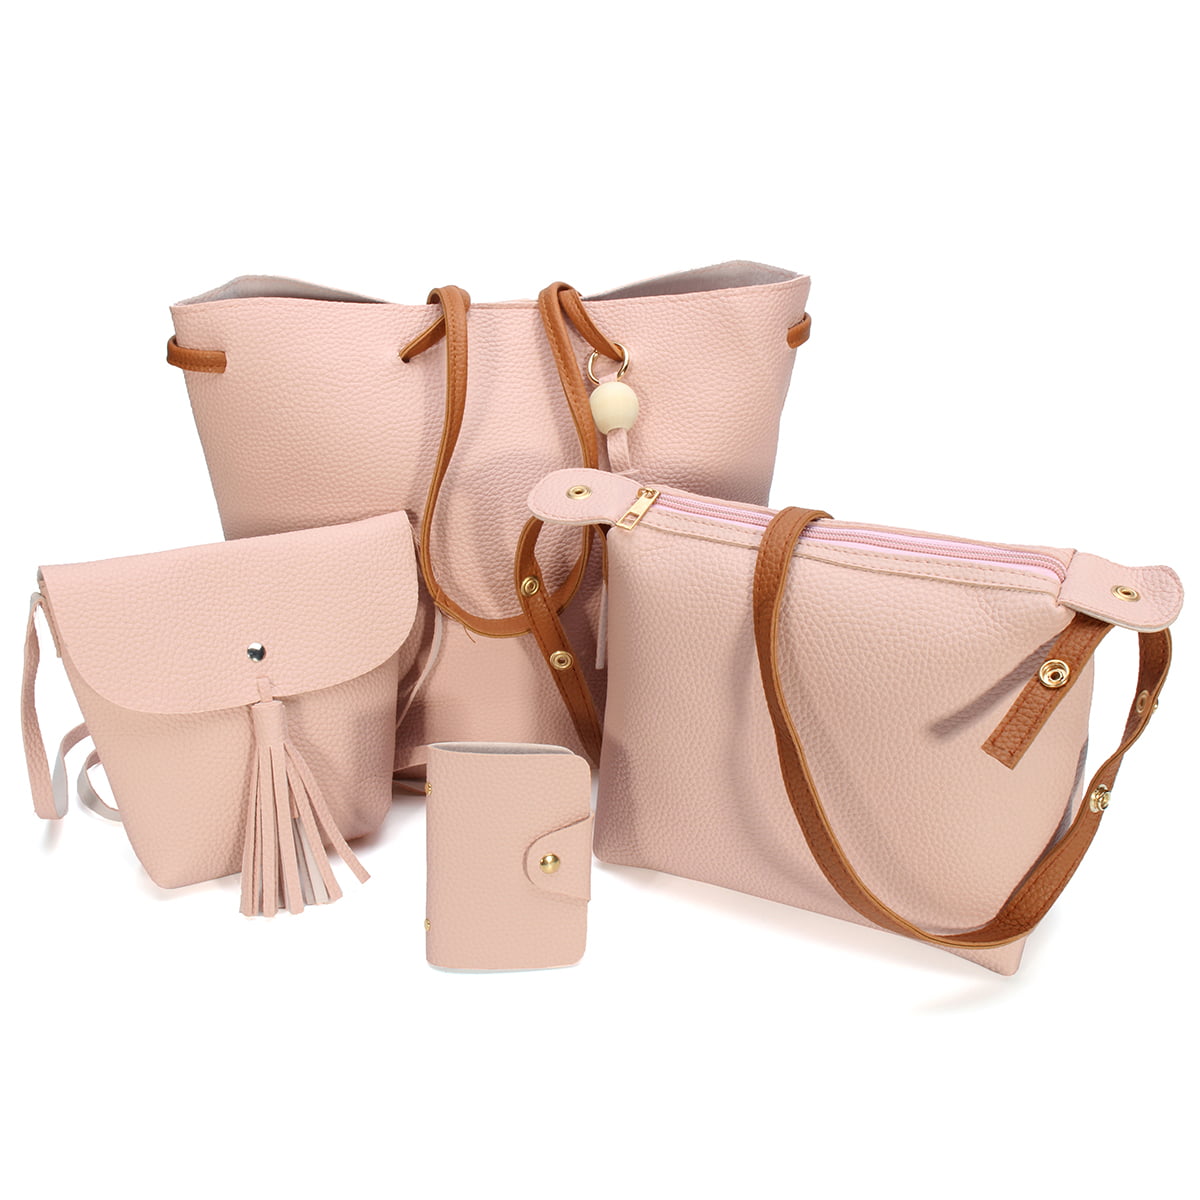 4pcs Women Leather Handbag Shoulder Bag Tote Purse Messenger Satchel Clutch 